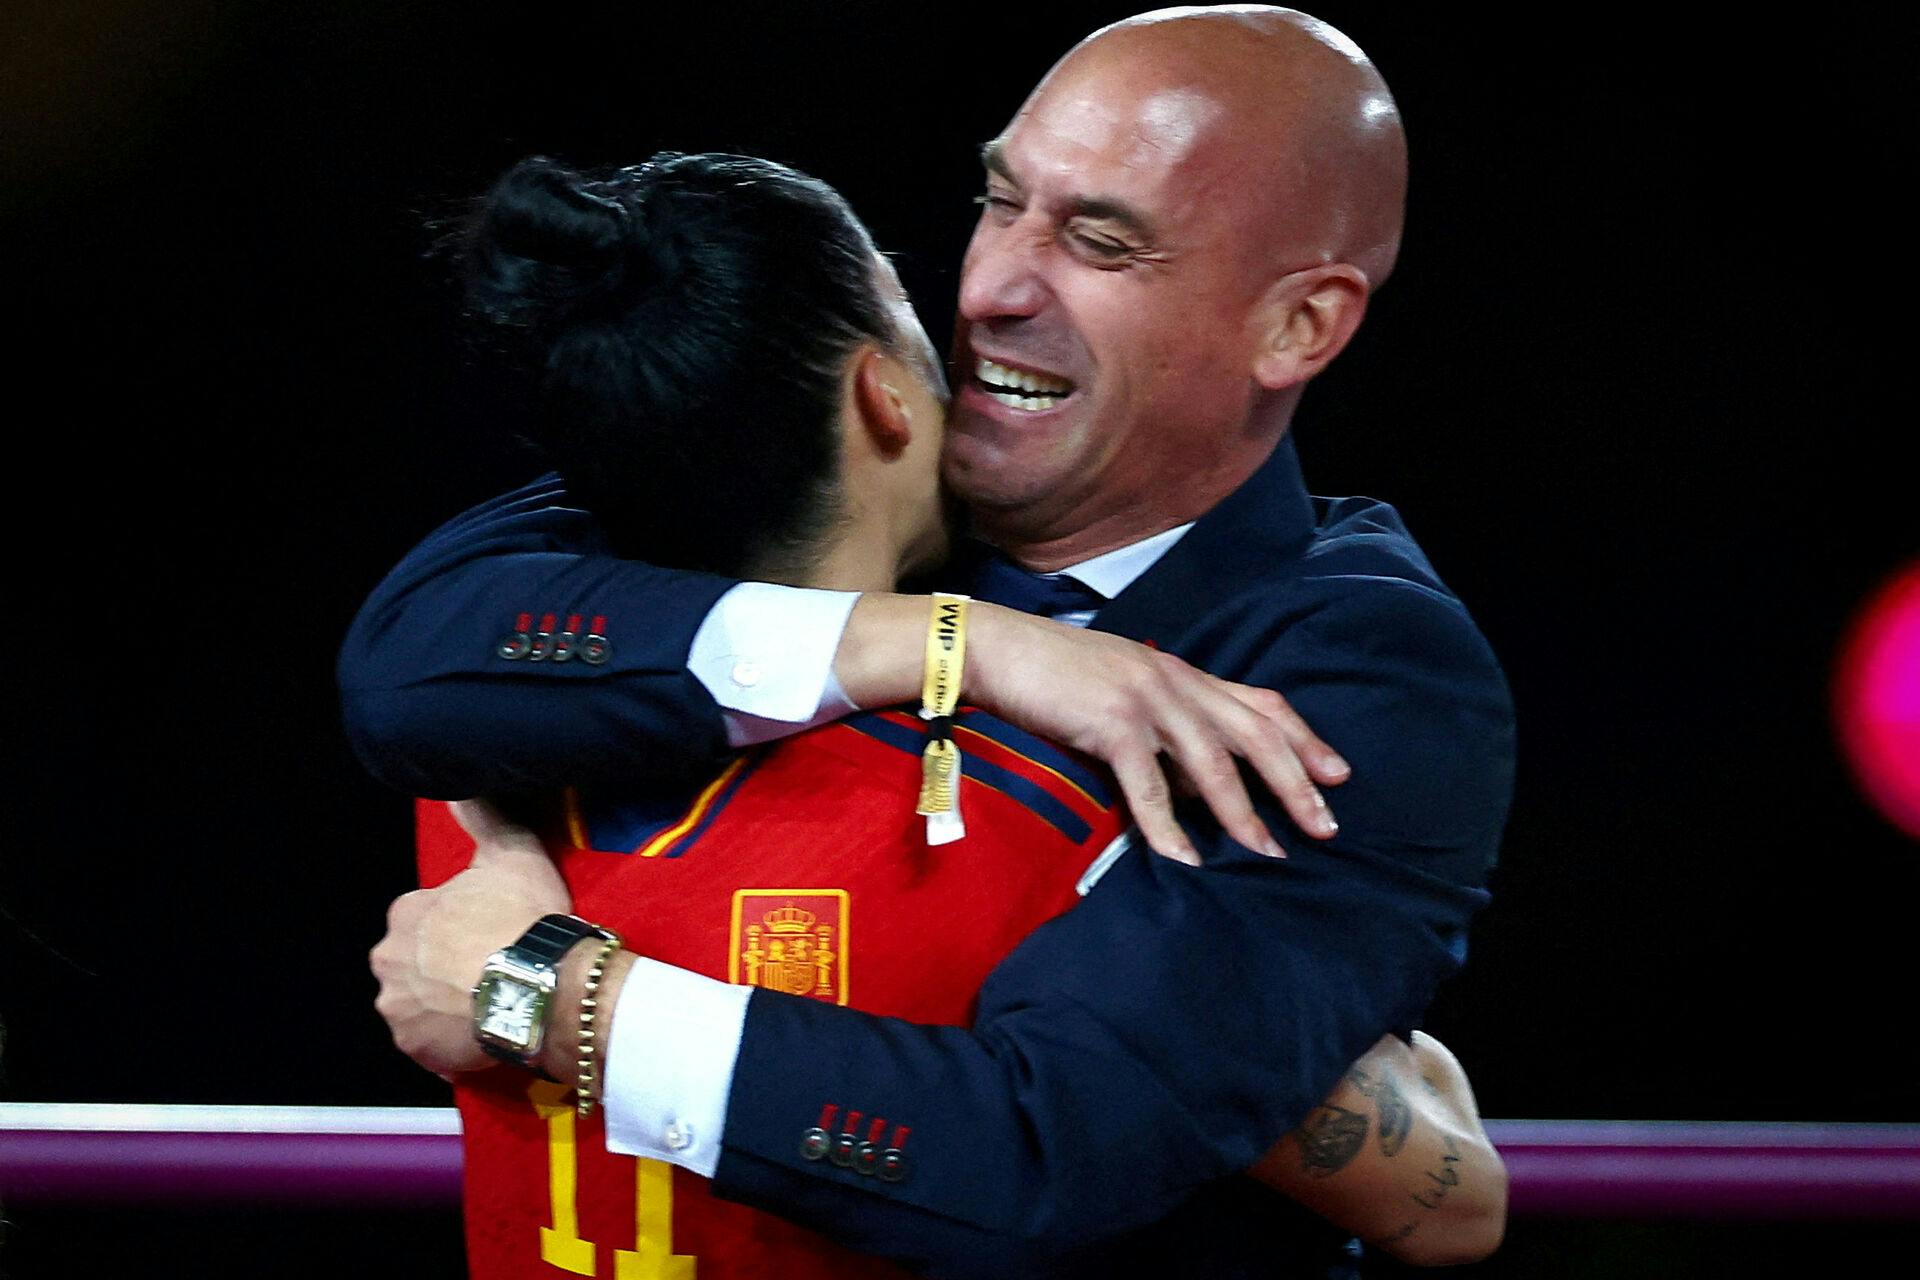 En spansk dommer mener, at den tidligere spanske fodboldboss Luis Rubiales skal stilles for retten for det kys, han gav landsholdsspilleren Jenni Hermoso efter VM-finalen.